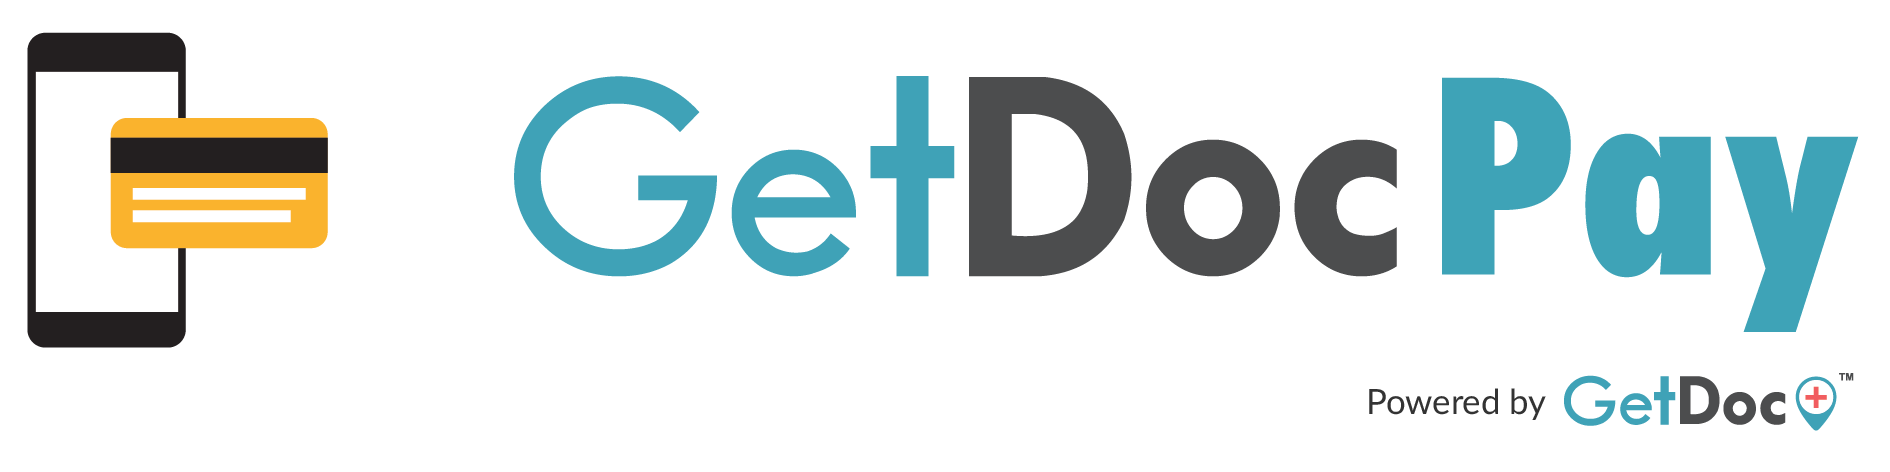 GetDocPay Logo_Powered by GetDoc